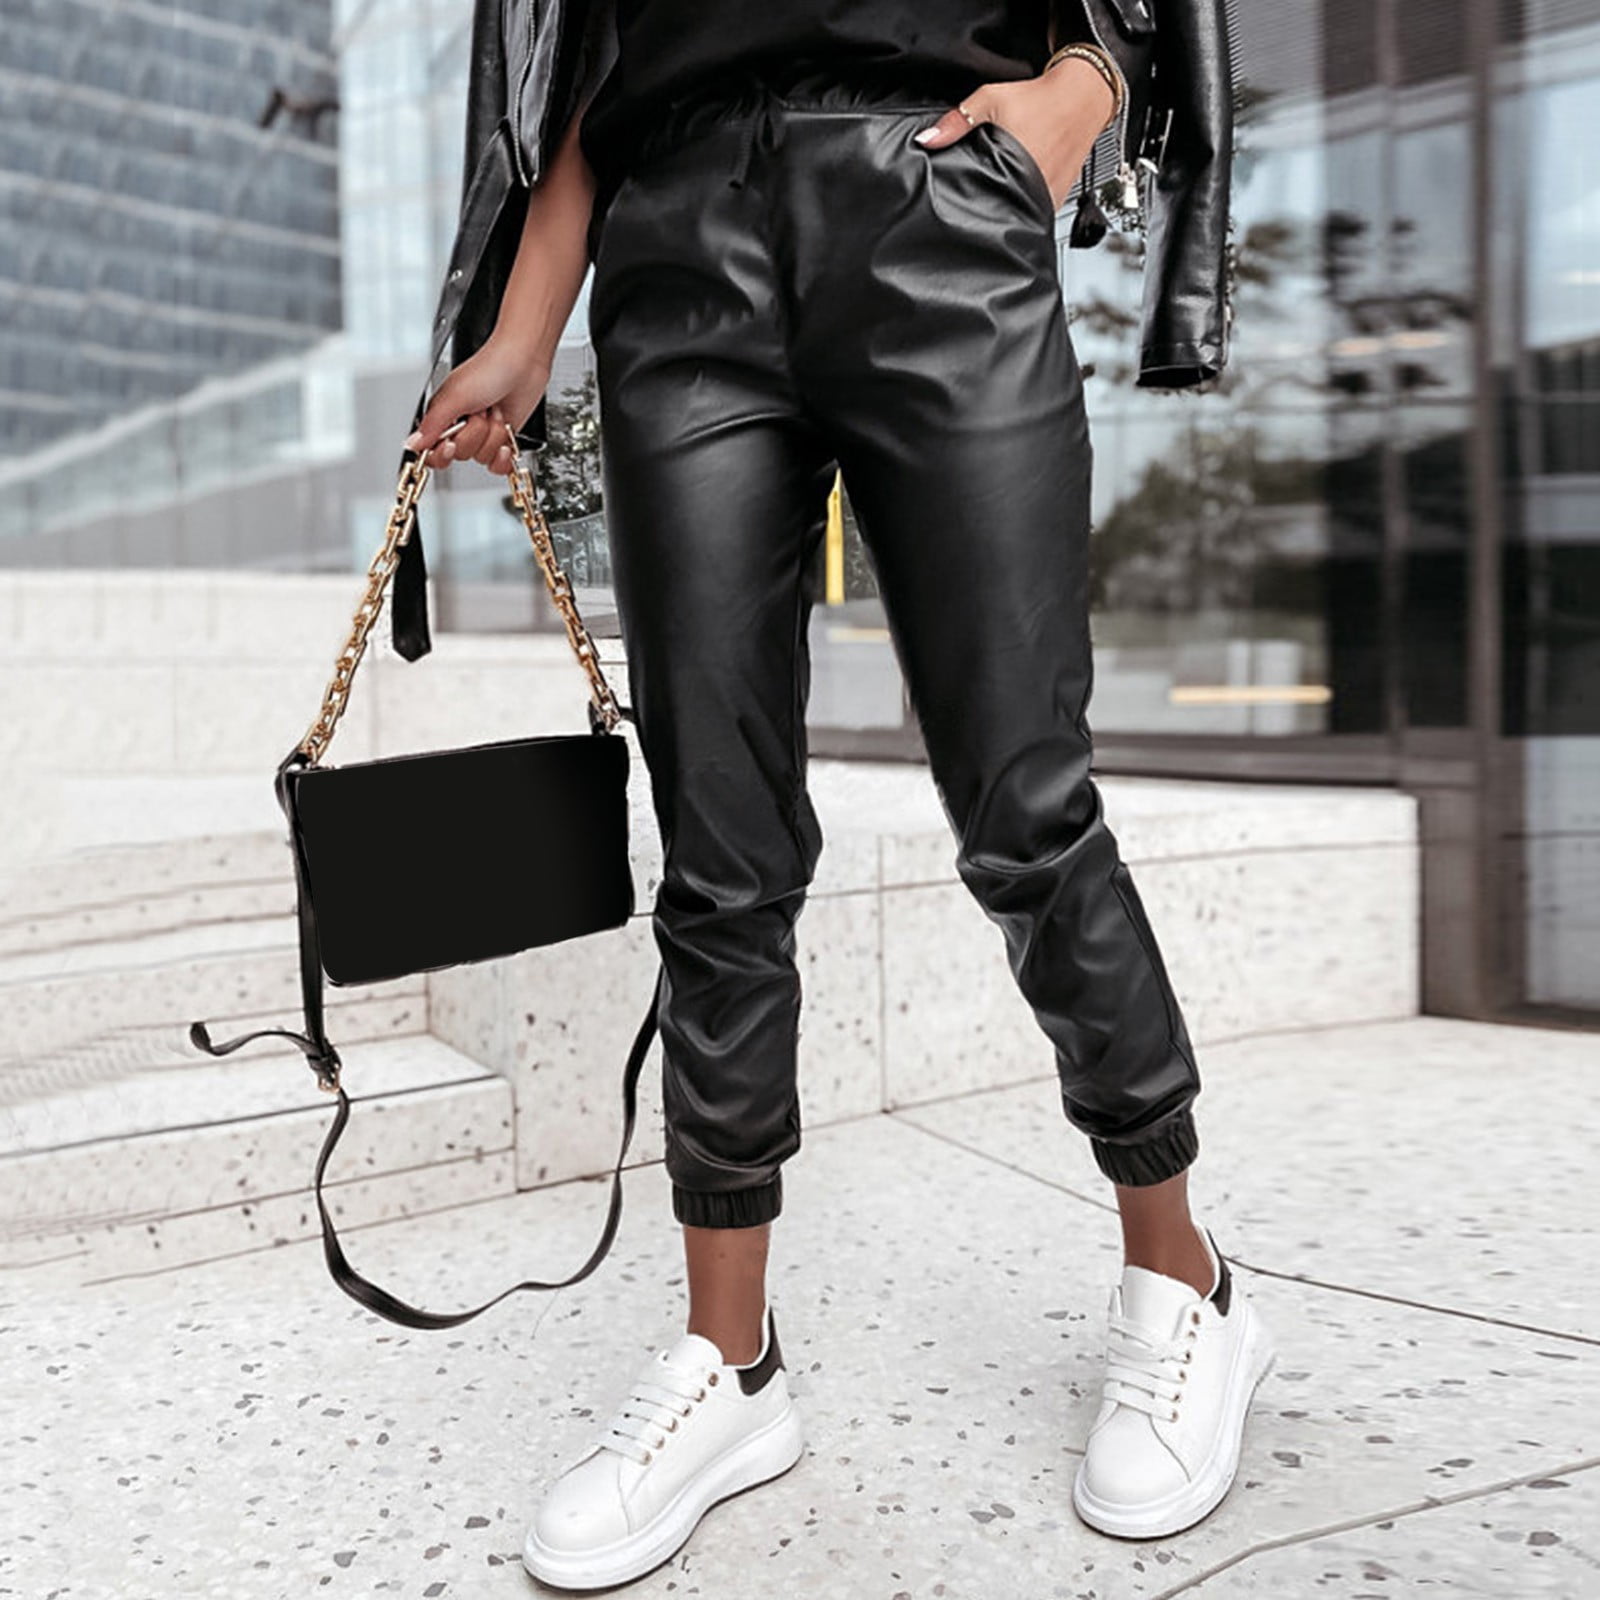 Lana Genuine Leather Pants Black - Zjoosh